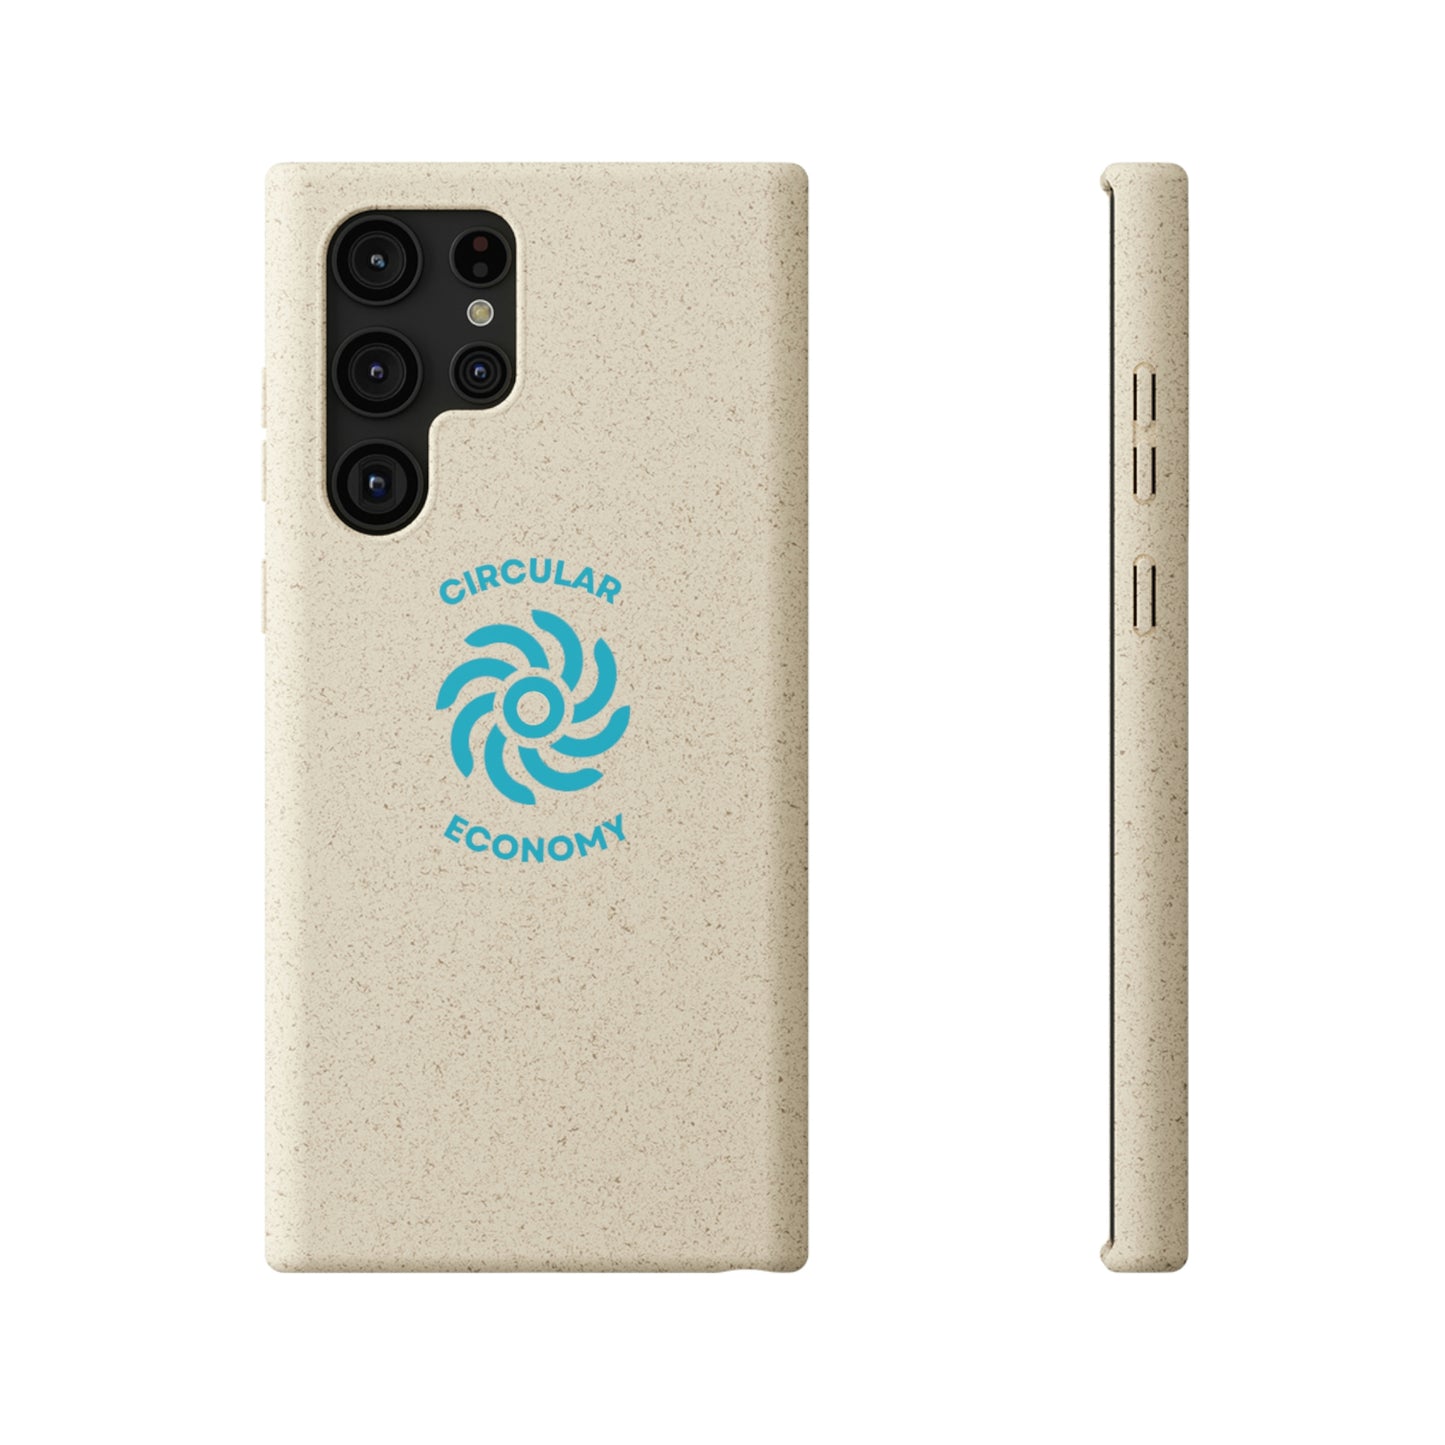 Biodegradable Samsung Cases - Circular Economy